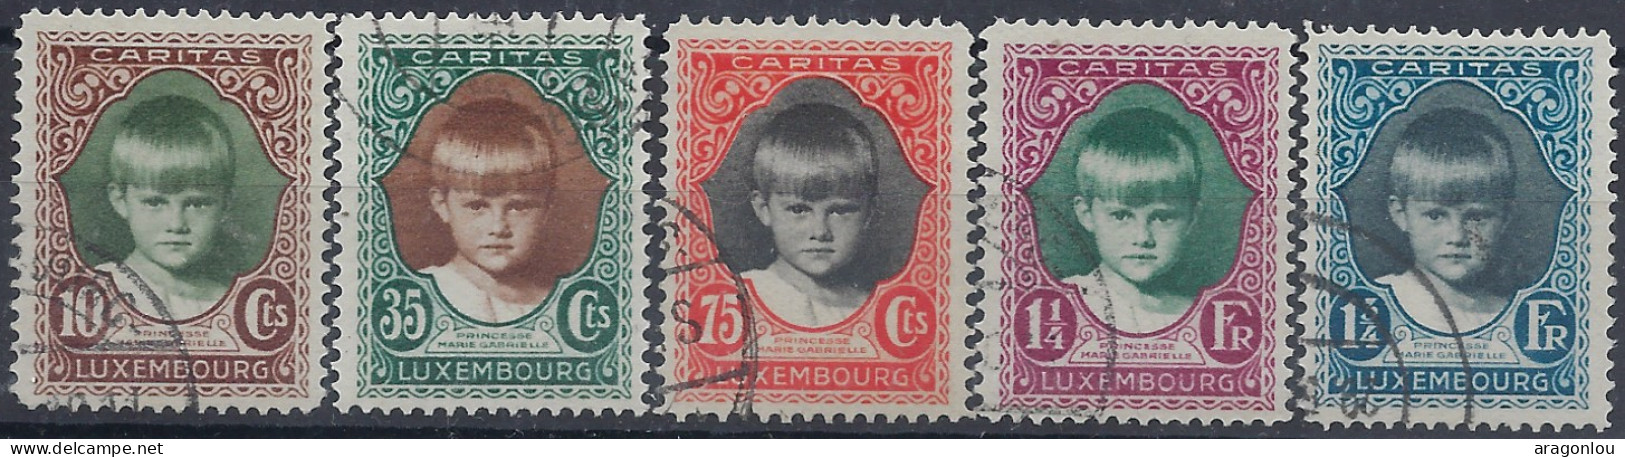 Luxembourg - Luxemburg - Timbres - 1929   Caritas   Princesse Marie-Gabrielle   Série   ° - Blocks & Sheetlets & Panes